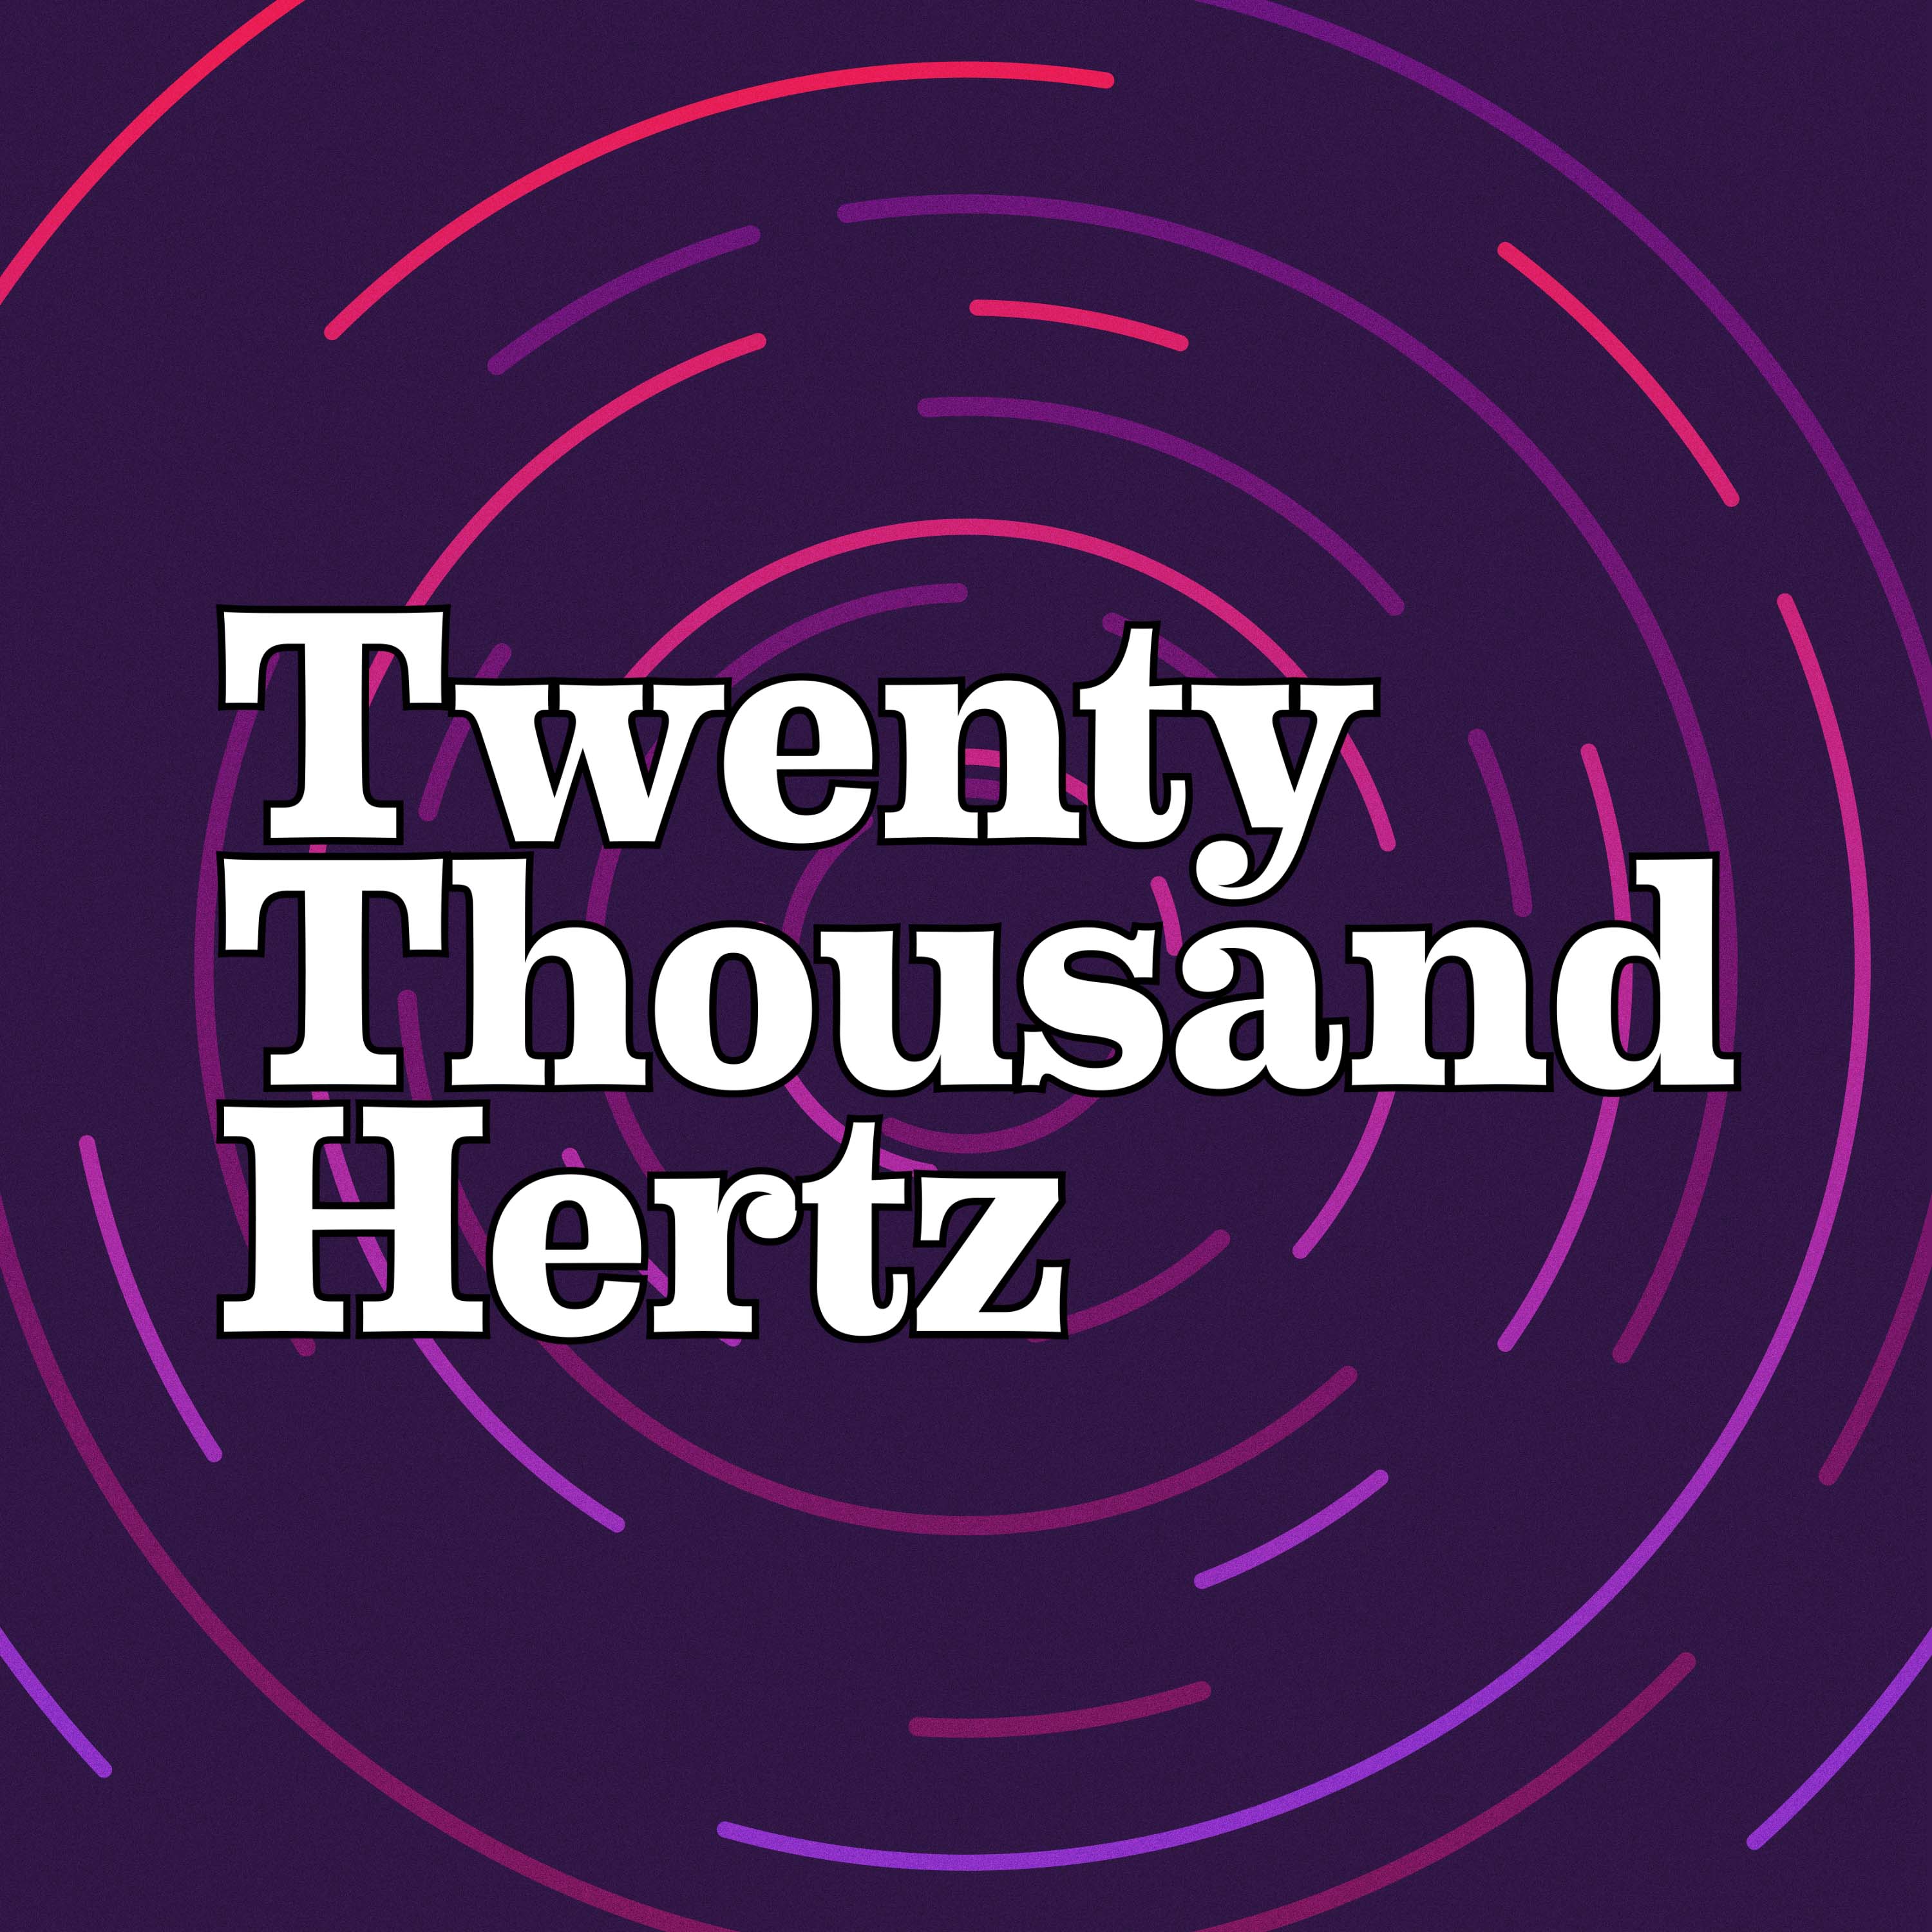 Twenty Thousand Hertz podcast